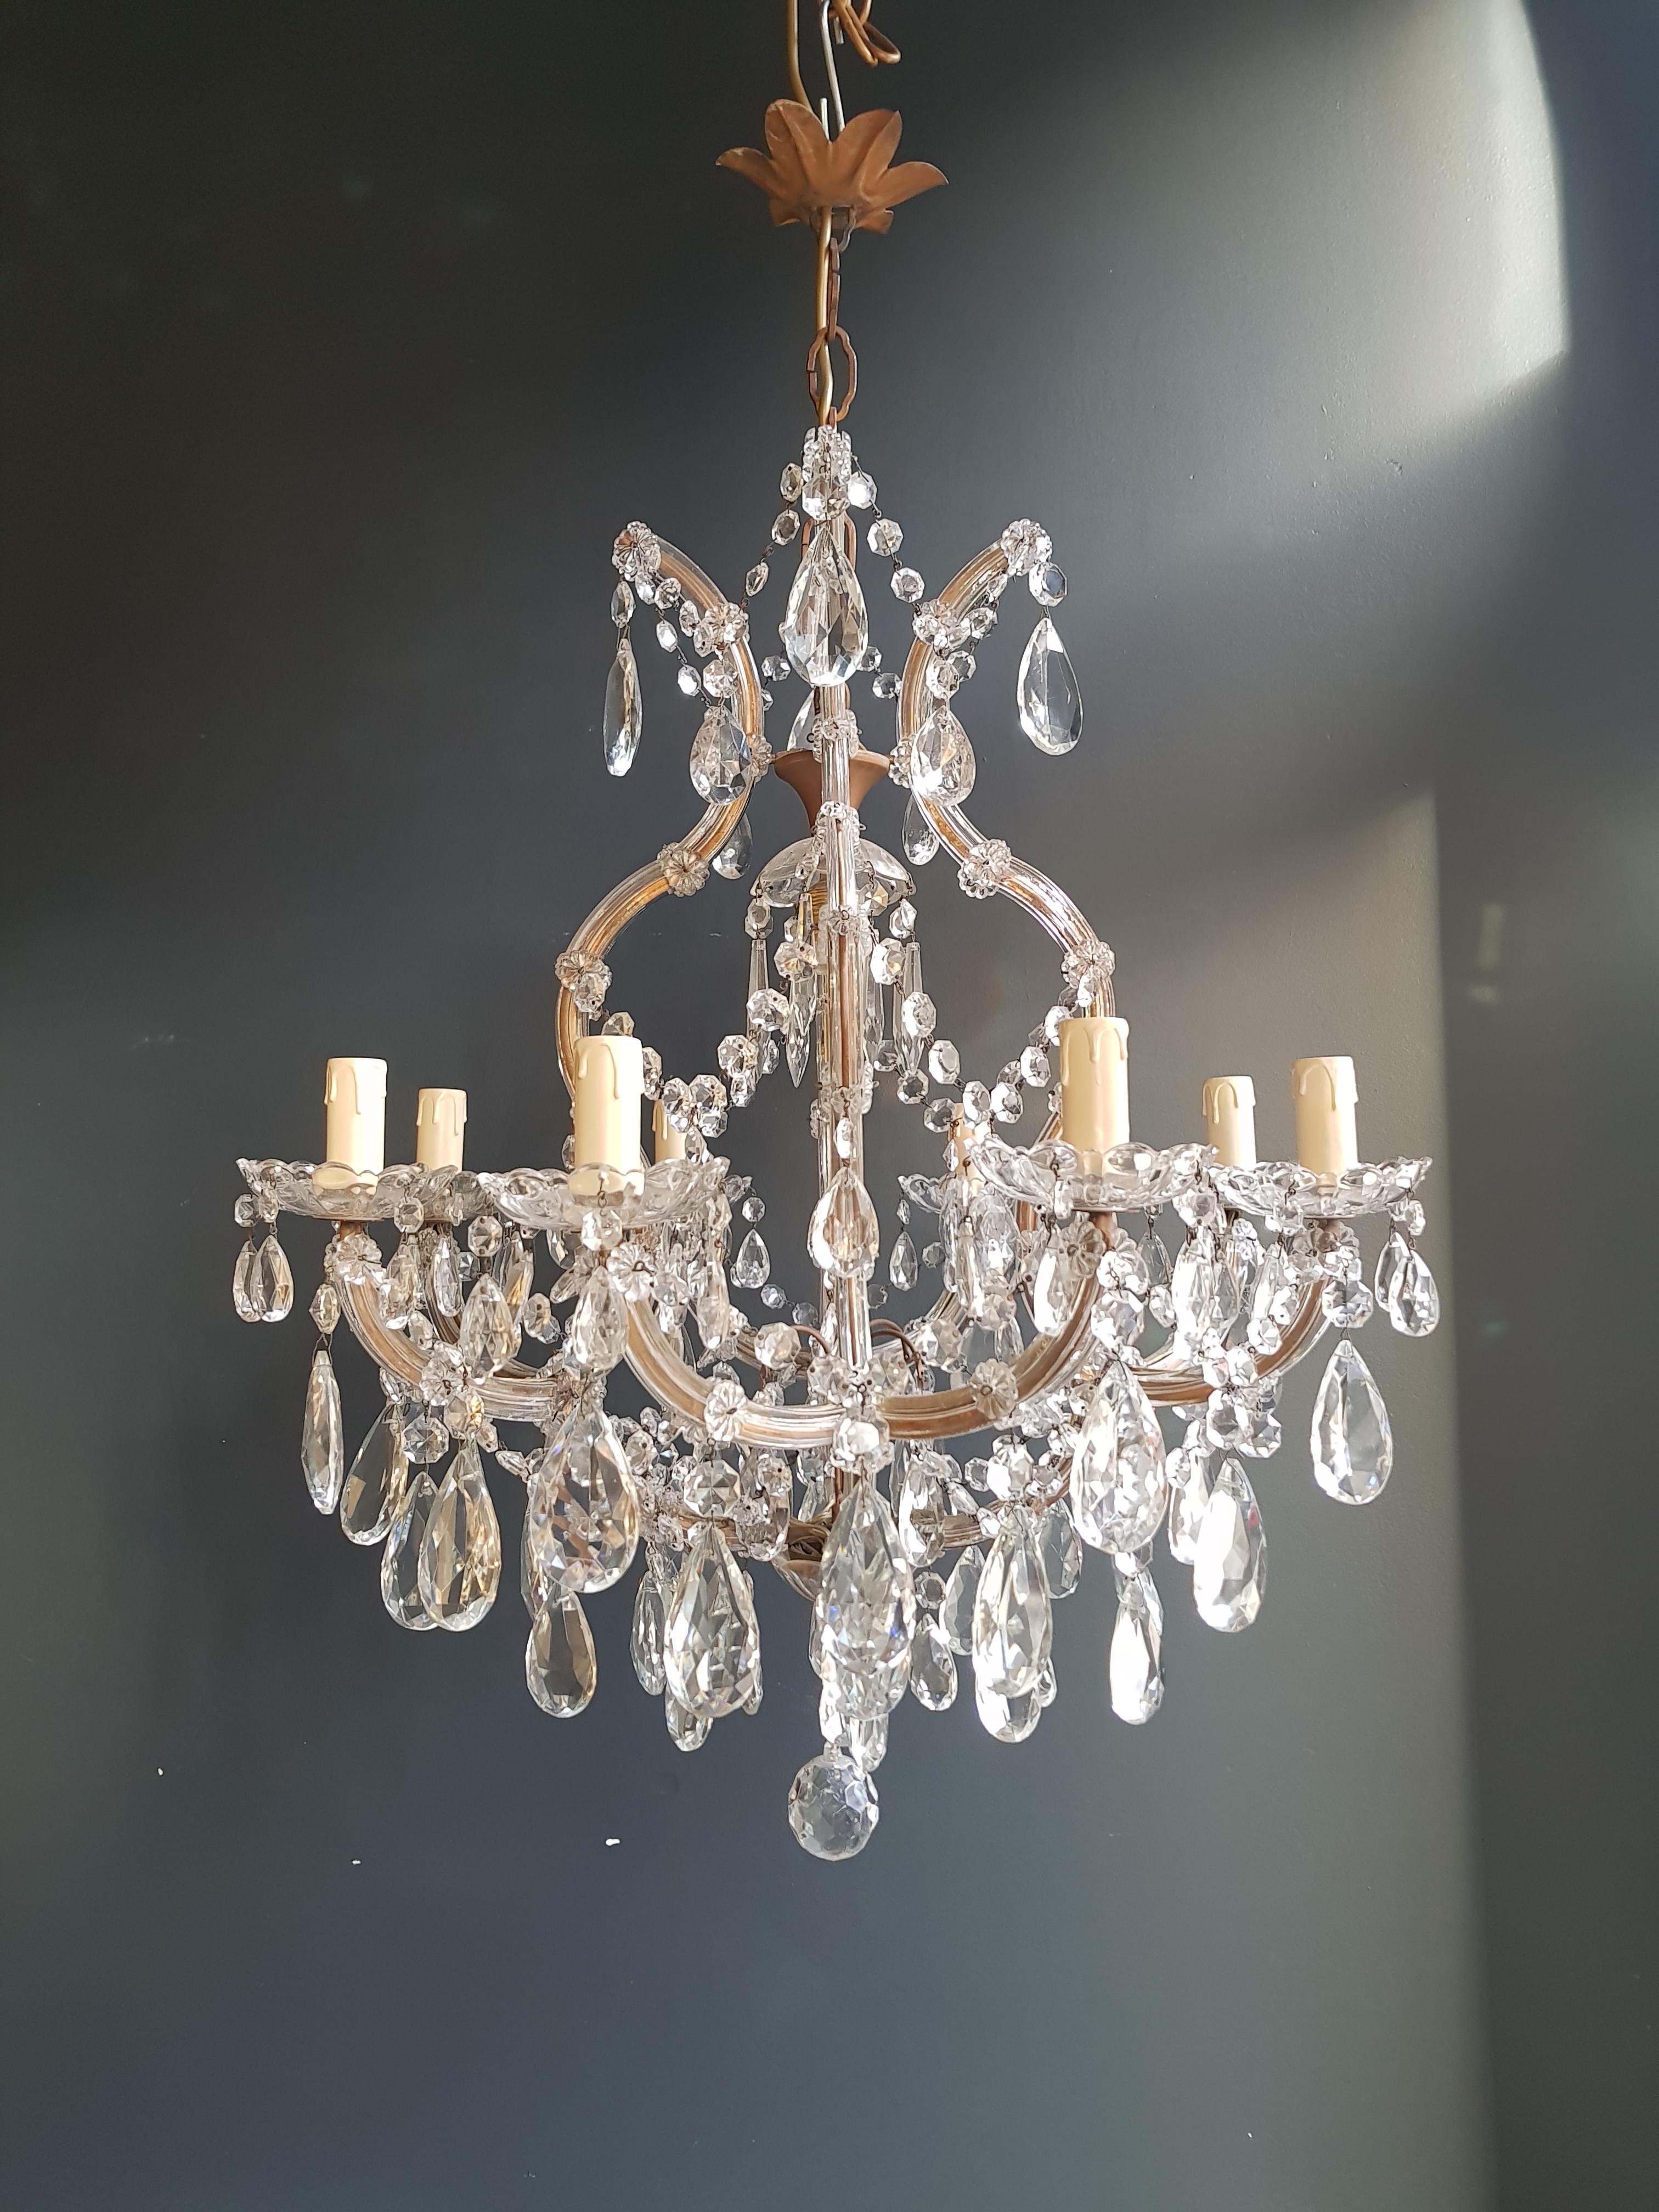 Mid-20th Century Maria Theresa Crystal Chandelier Antique Ceiling Lamp Lustre Art Nouveau